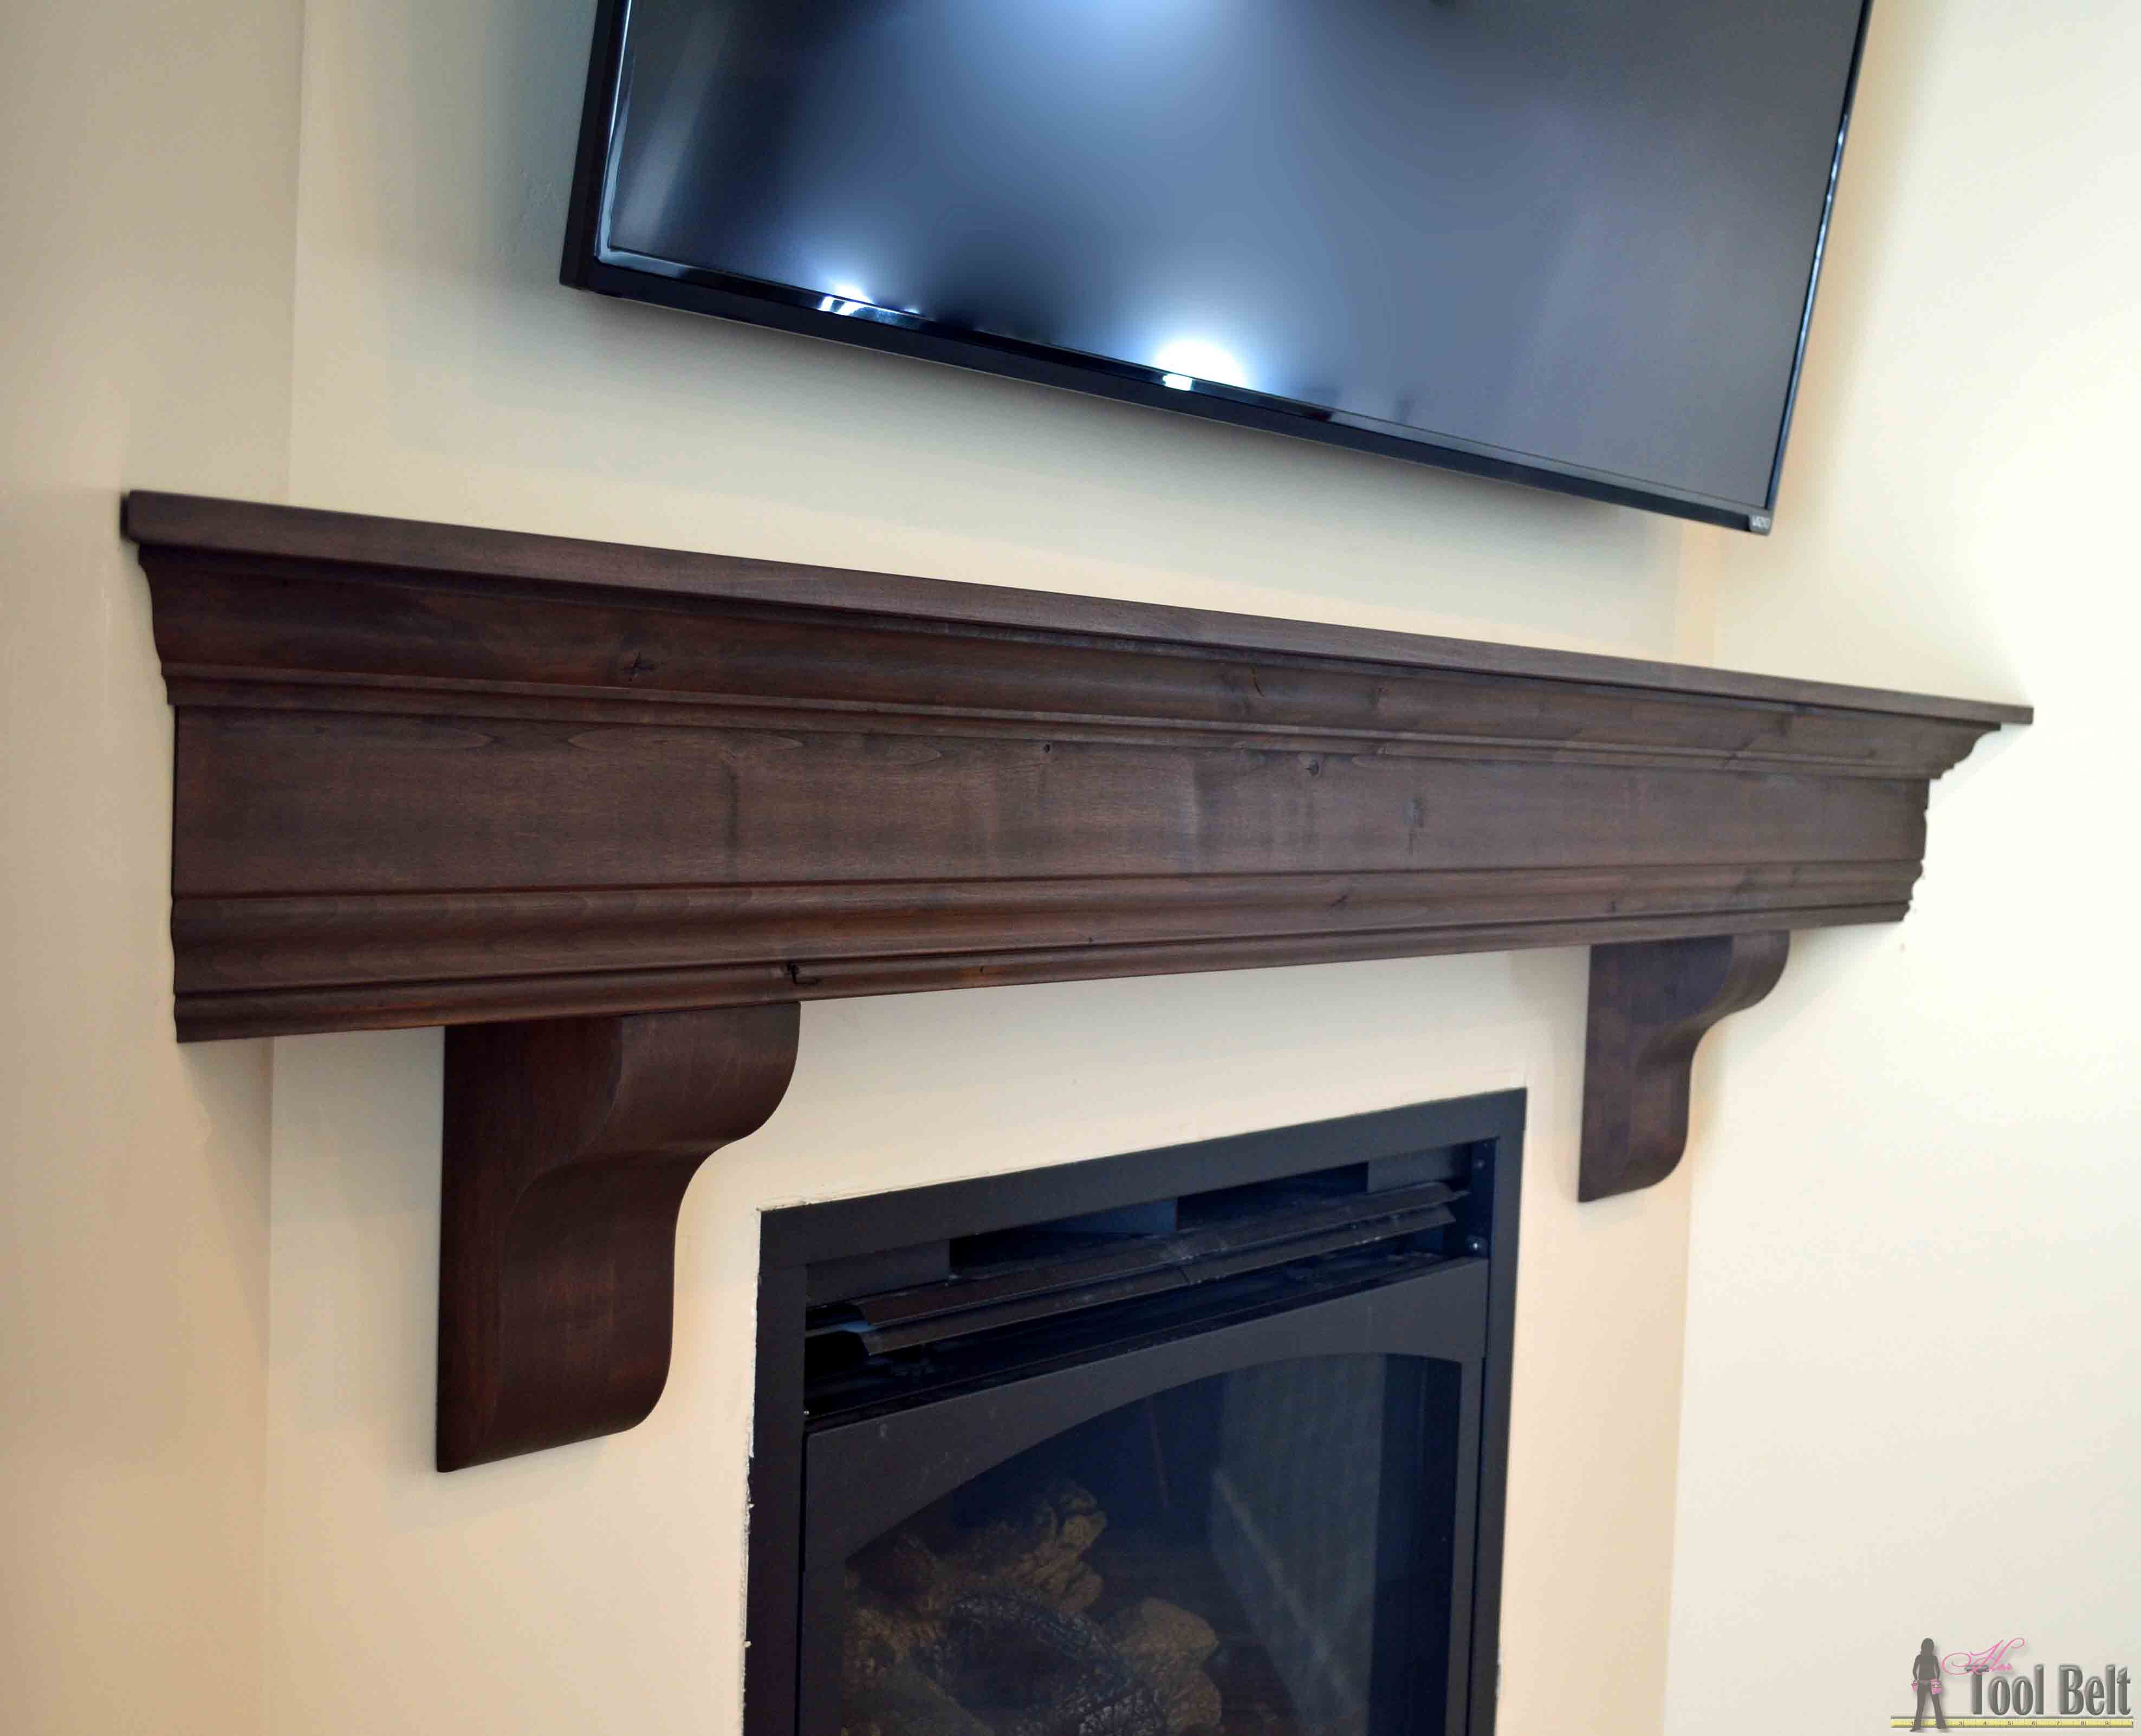 Best ideas about DIY Fireplace Mantel Shelf
. Save or Pin DIY Fireplace Mantel Shelf Her Tool Belt Now.